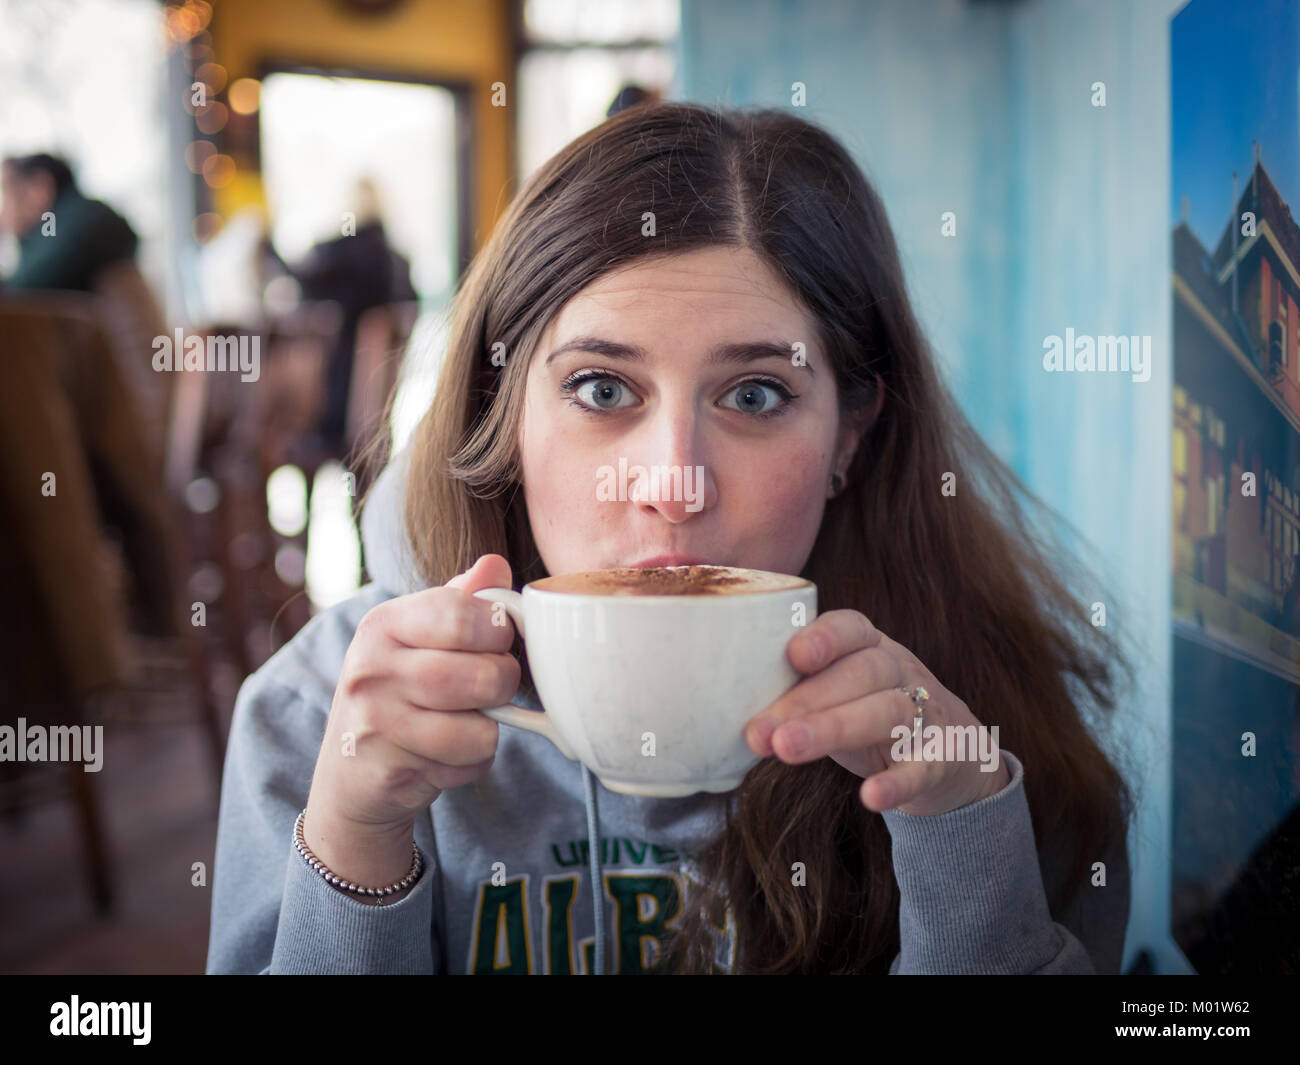 Una bella bruna ragazza sorseggia un caffè latte dal d'Lish da Tish Cafe di Saskatoon, Saskatchewan, Canada. Foto Stock